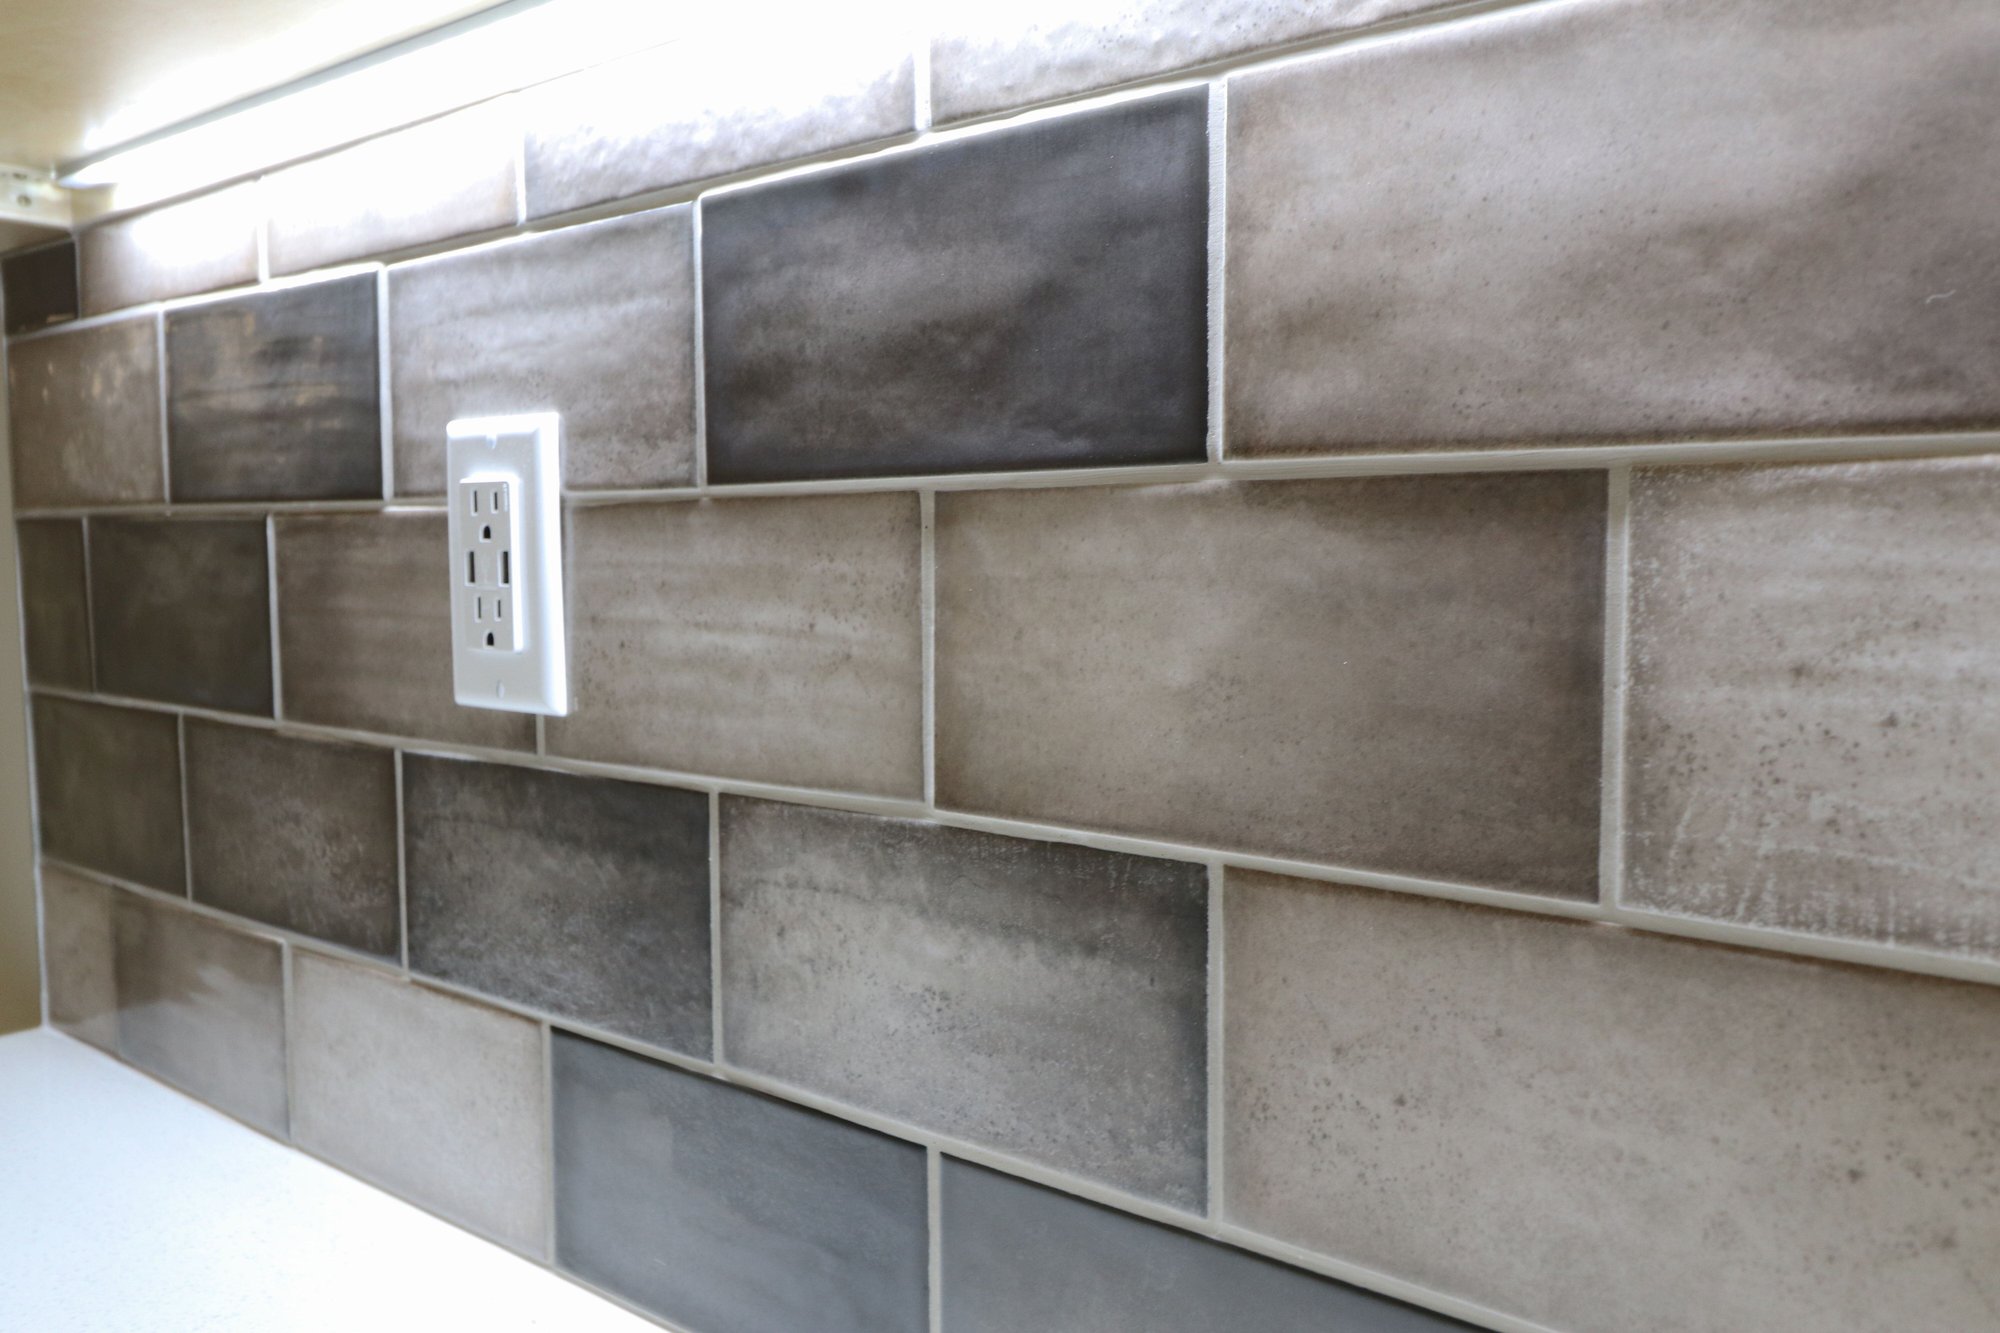 Redondo Beach Kitchen - best general contractor - tile backsplash ideas